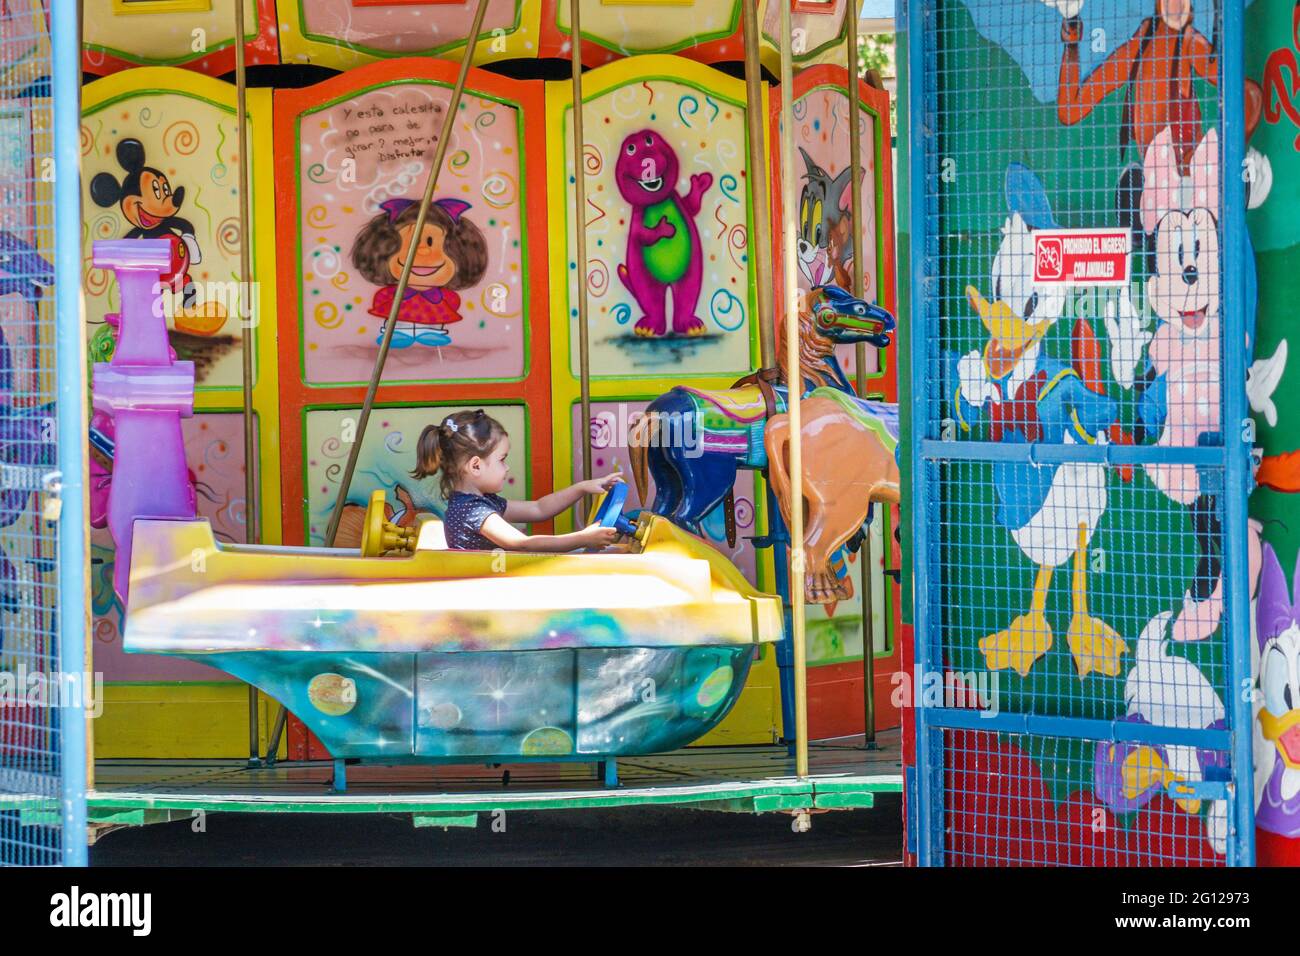 Argentina Buenos Aires Recoleta Plaza Teniente General Emilio Mitre parque público parque infantil paseo de diversión carrusel merry-go-round girl child ri Foto de stock